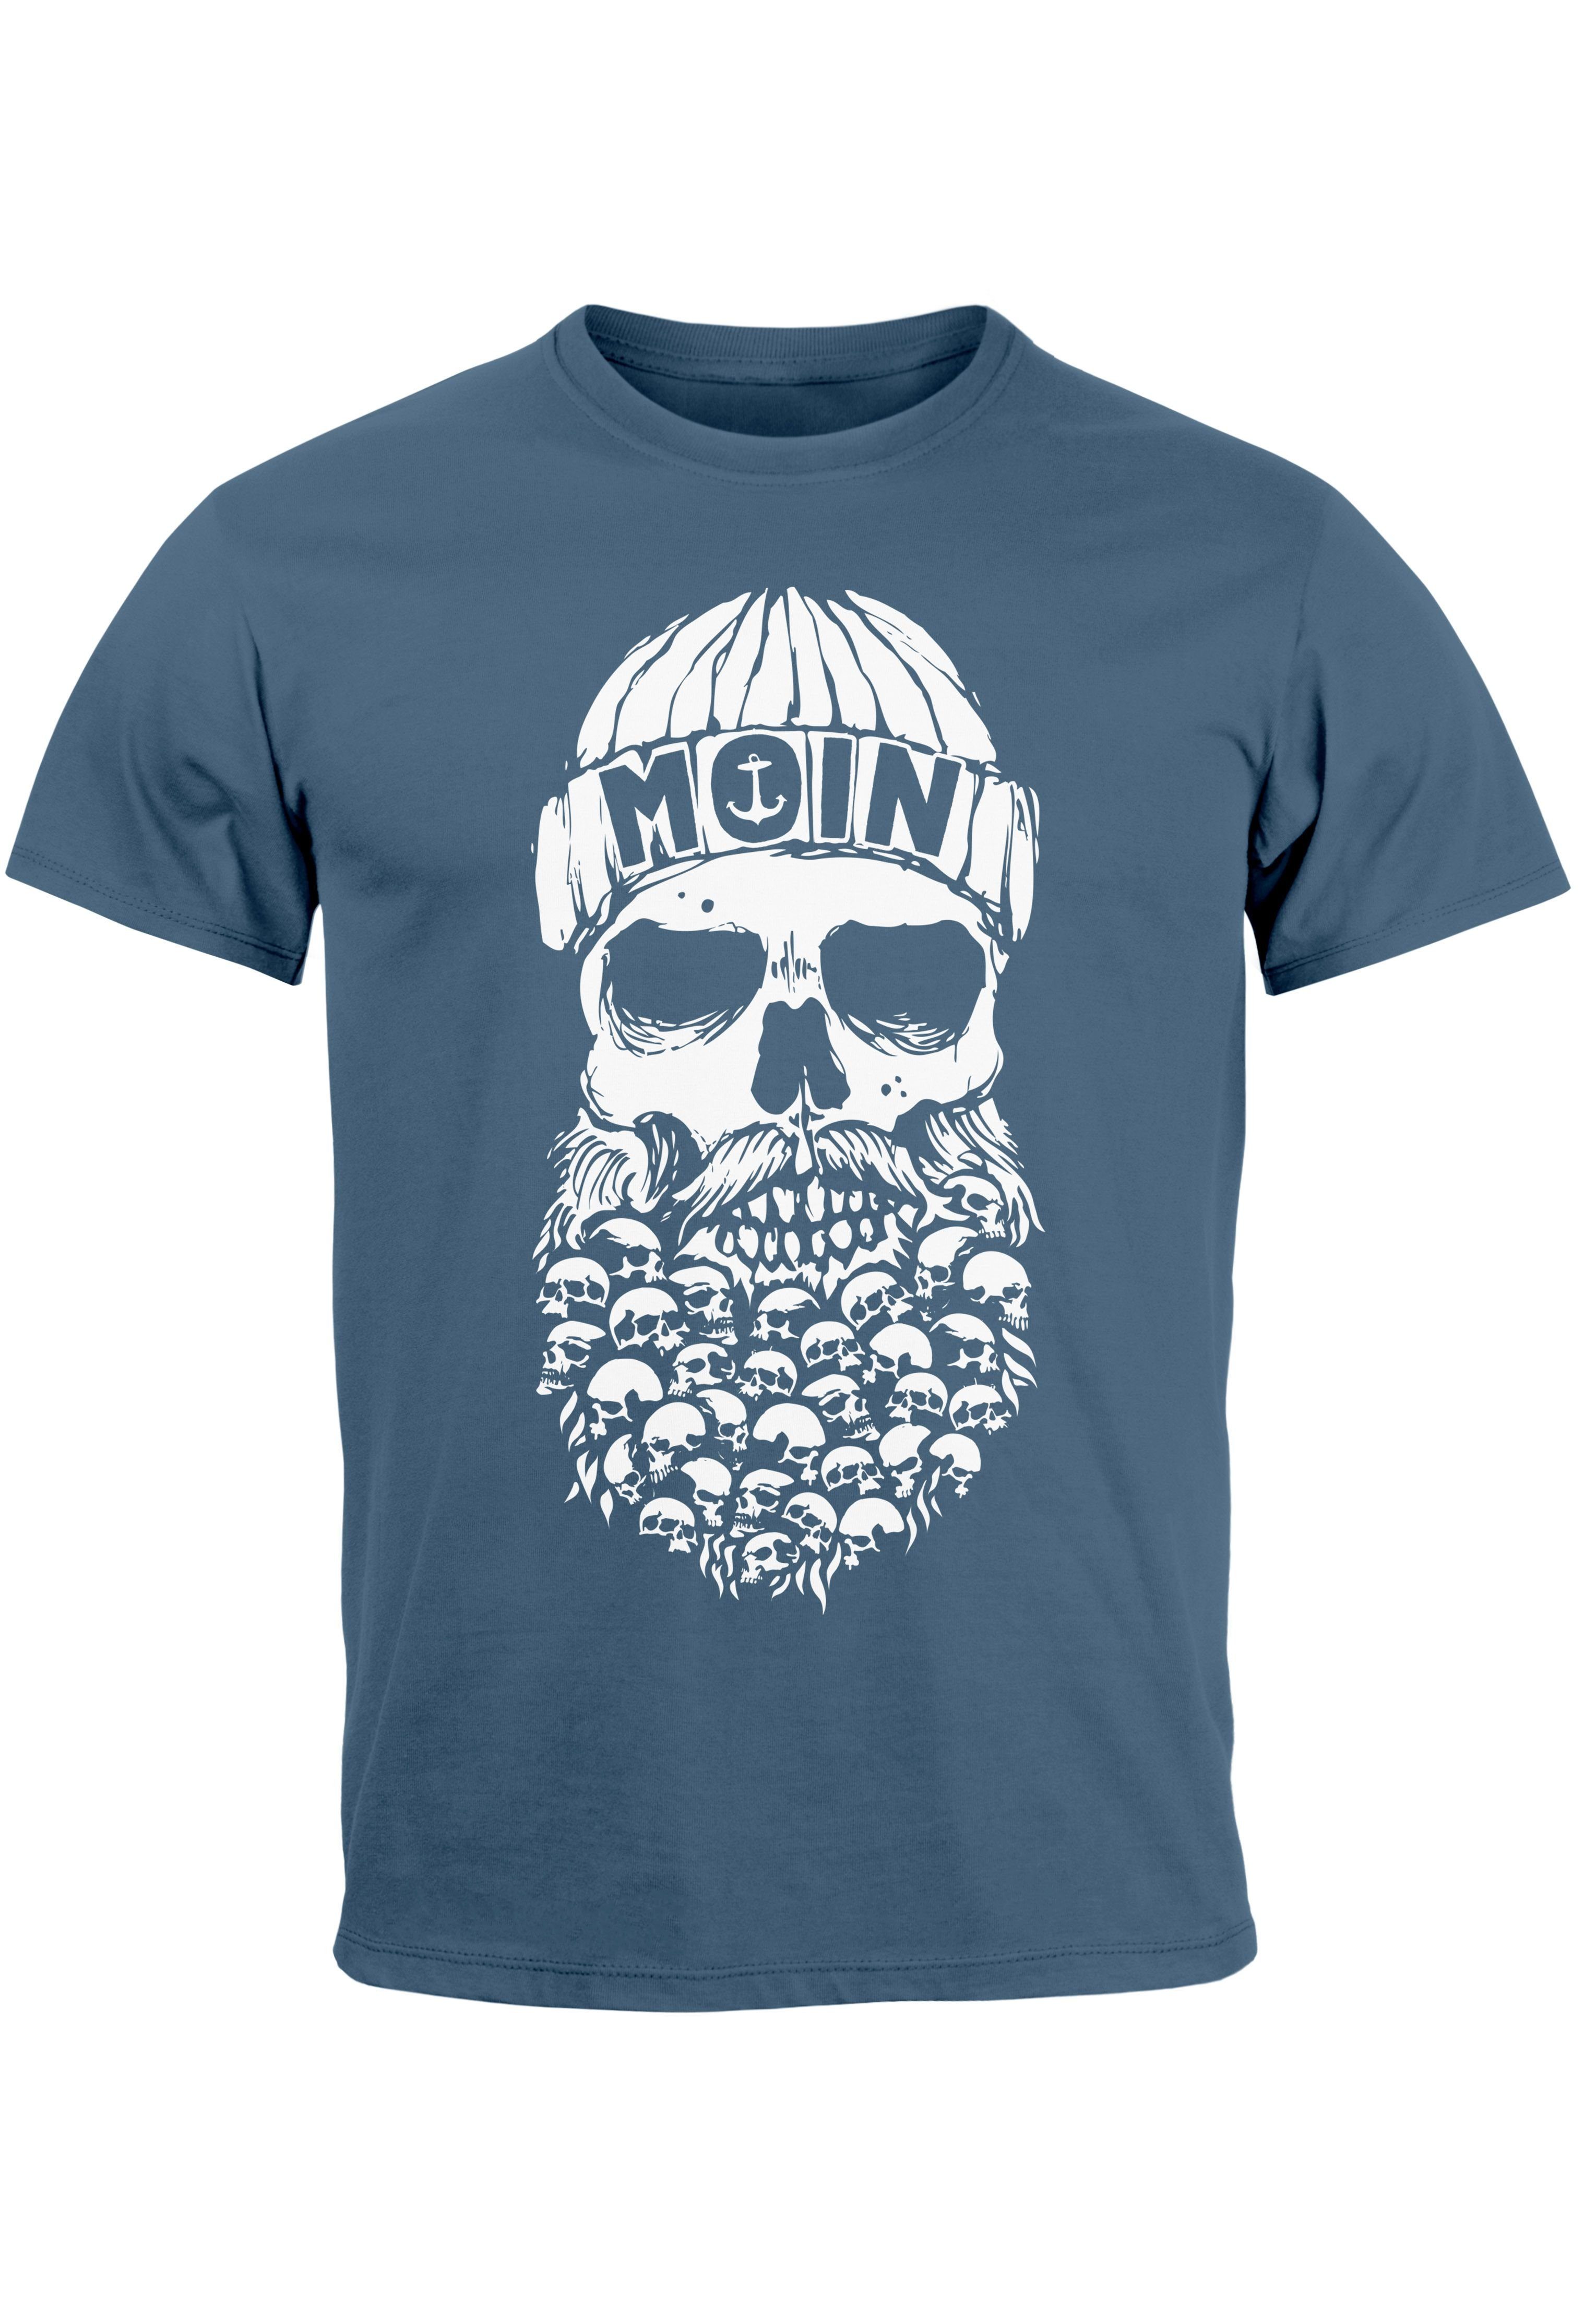 T-Shirt Nordisch Hamburg Moin Fas Print blue Dialekt Skull denim mit Anker Print-Shirt Totenkopf Neverless Herren